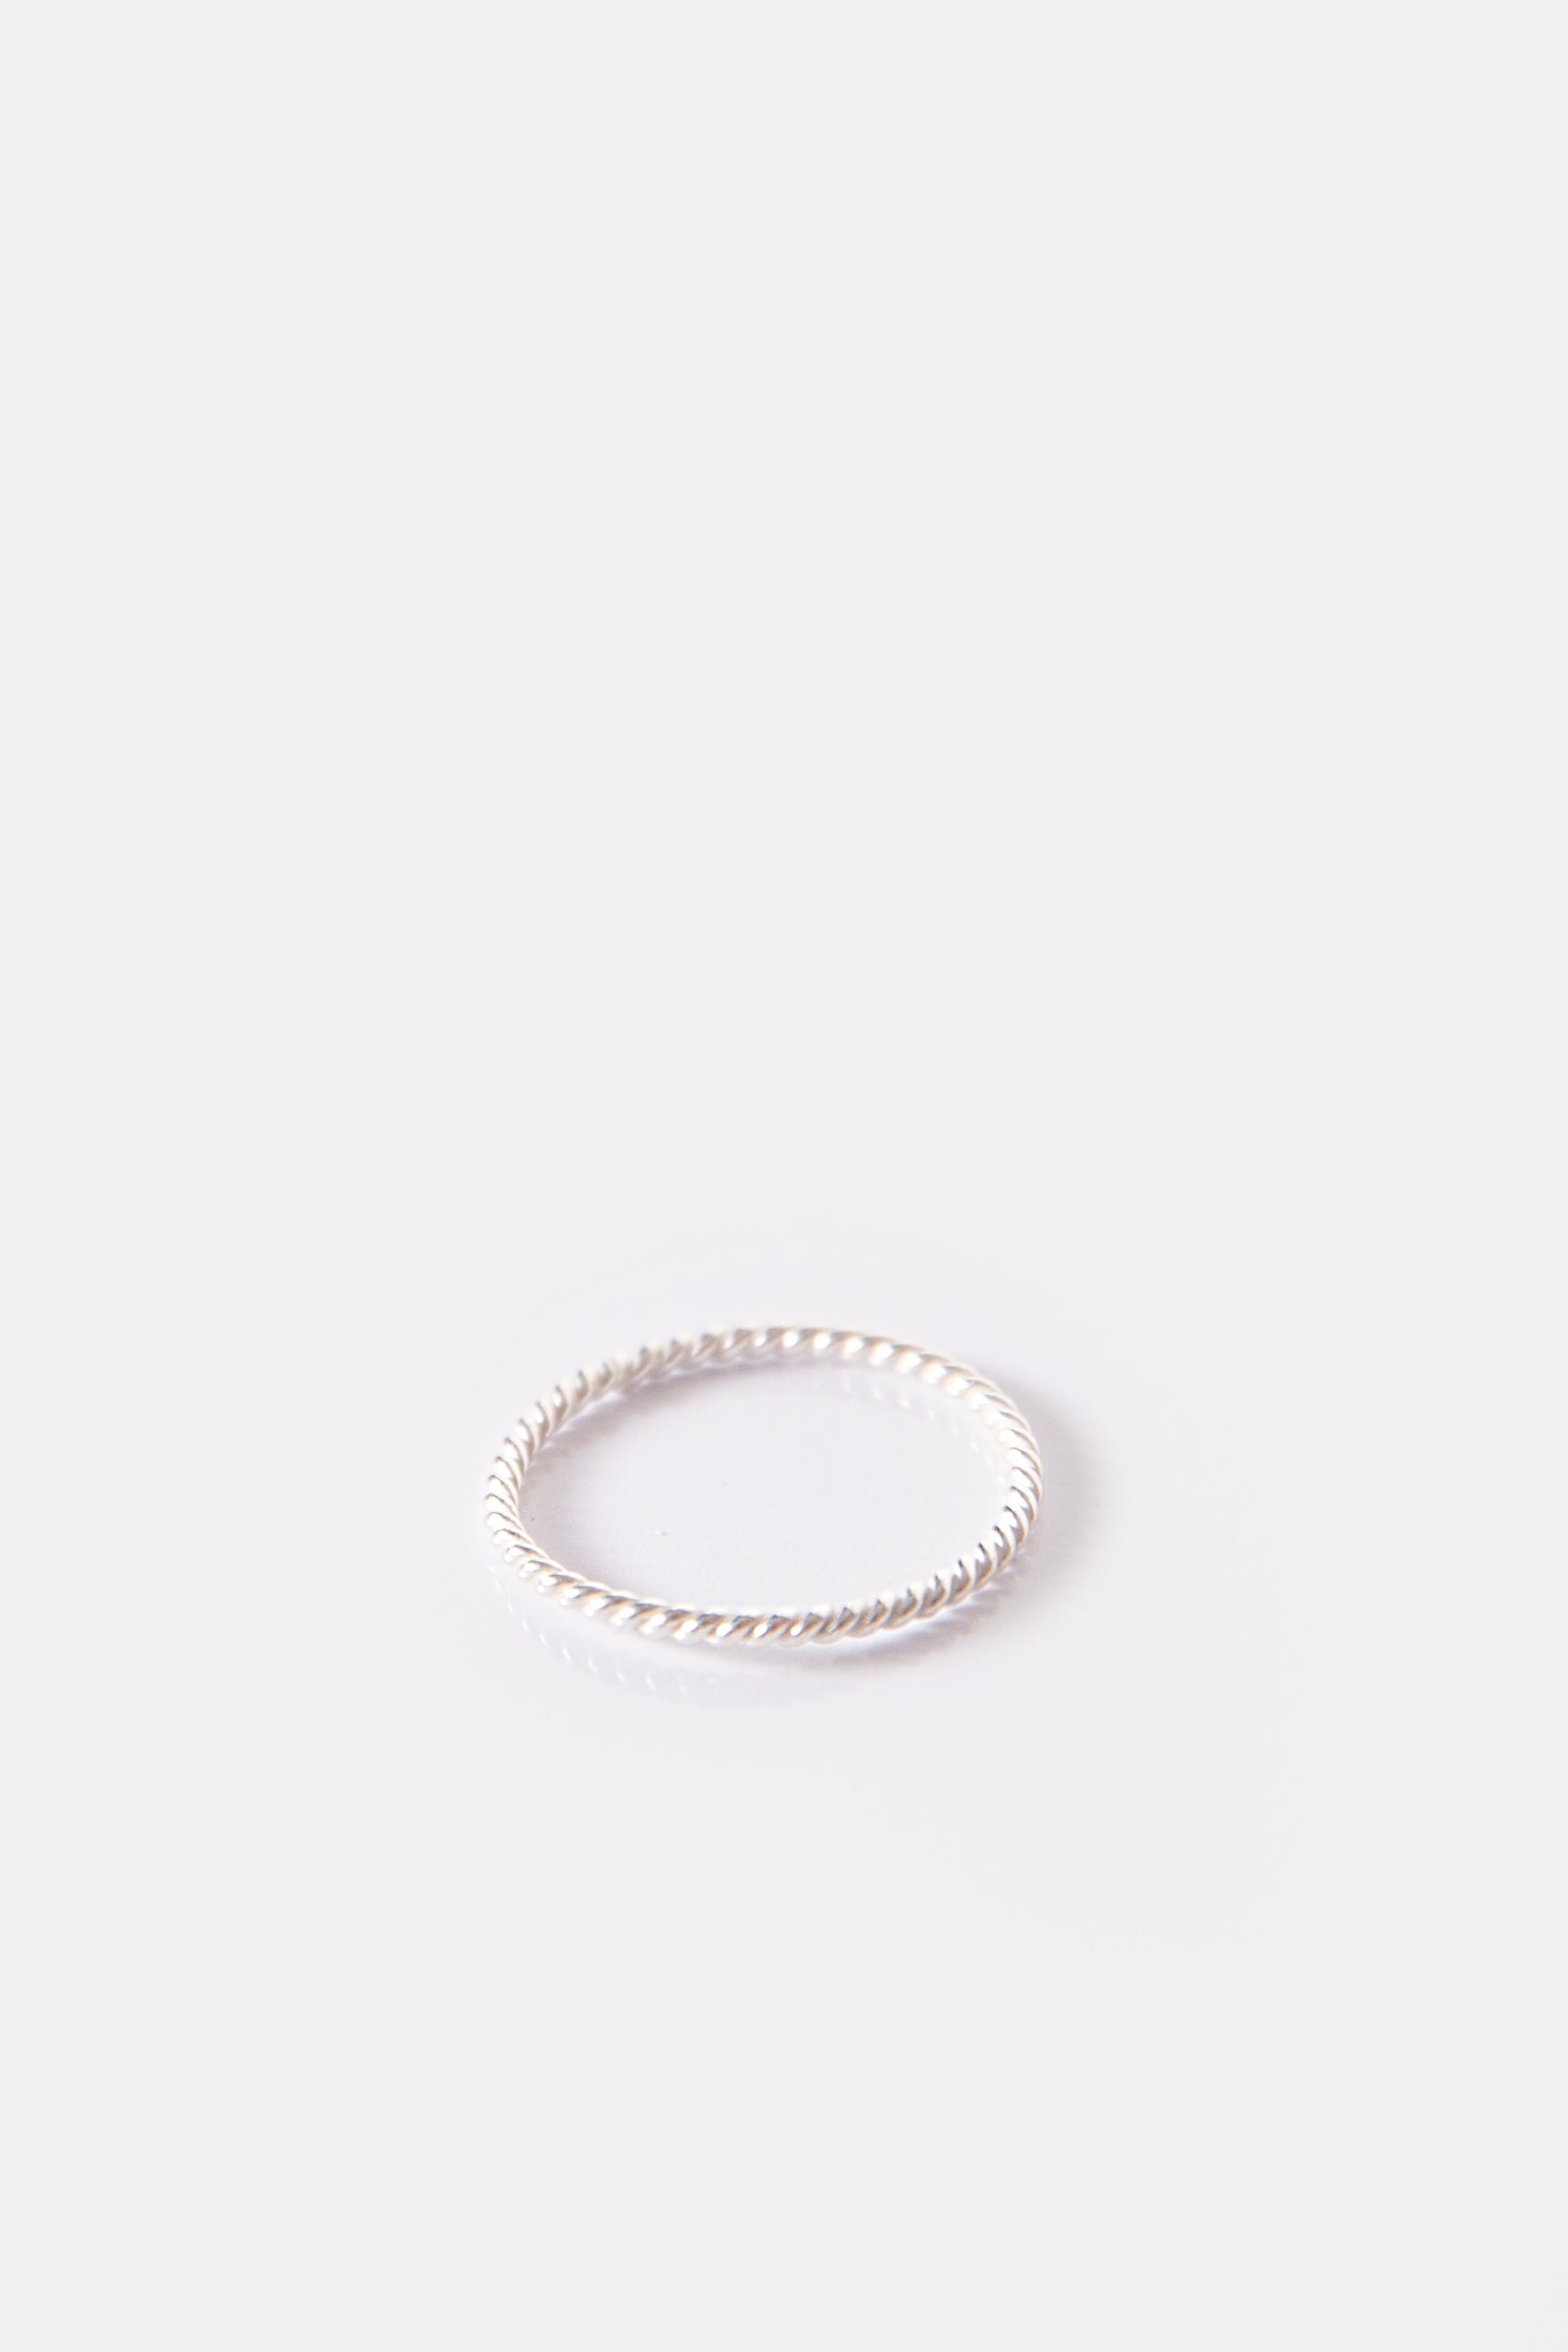 #anello #ring #argento #silver #fedina #torchon 